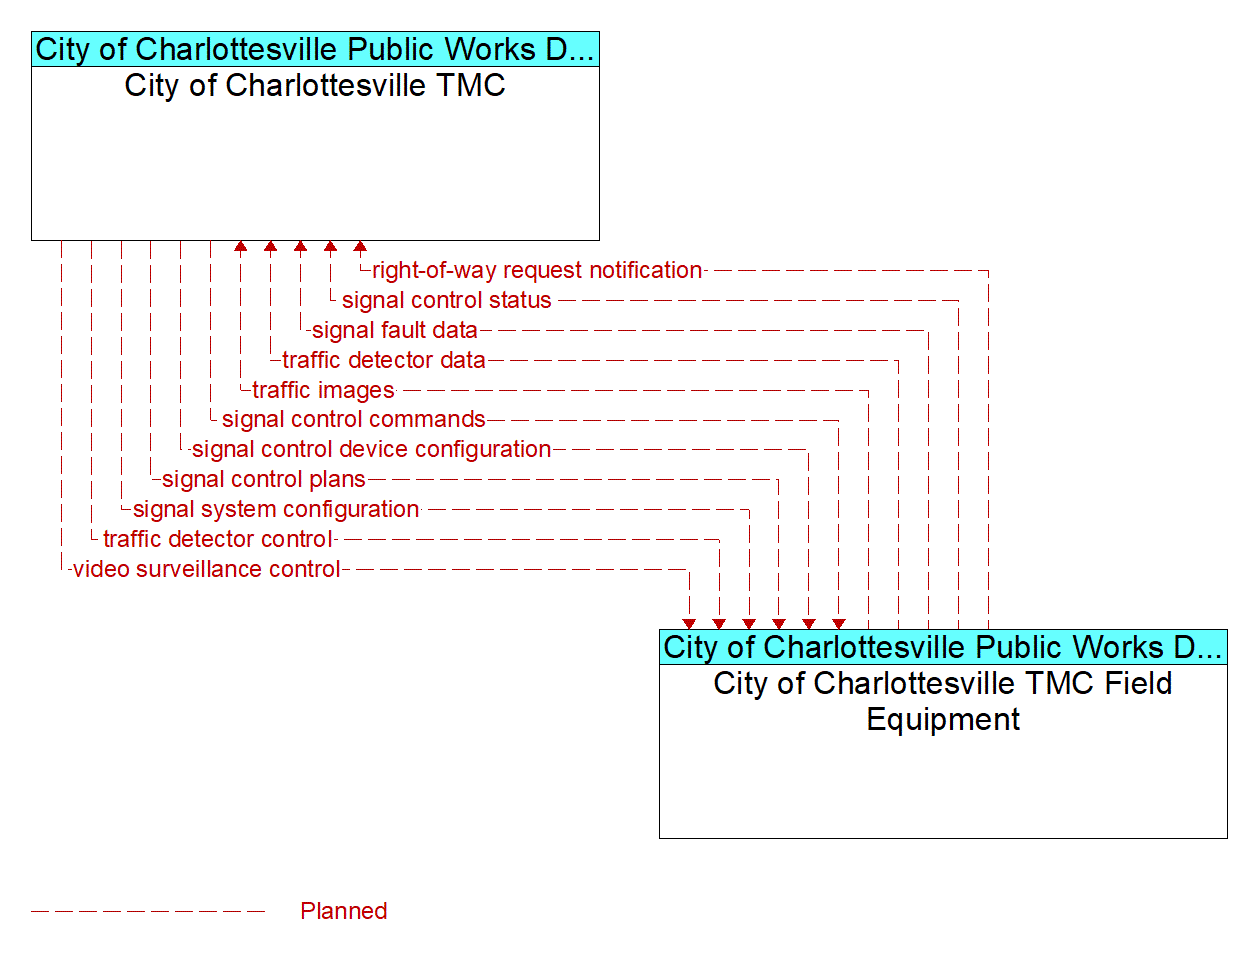 Architecture Flow Diagram: City of Charlottesville TMC Field Equipment <--> City of Charlottesville TMC